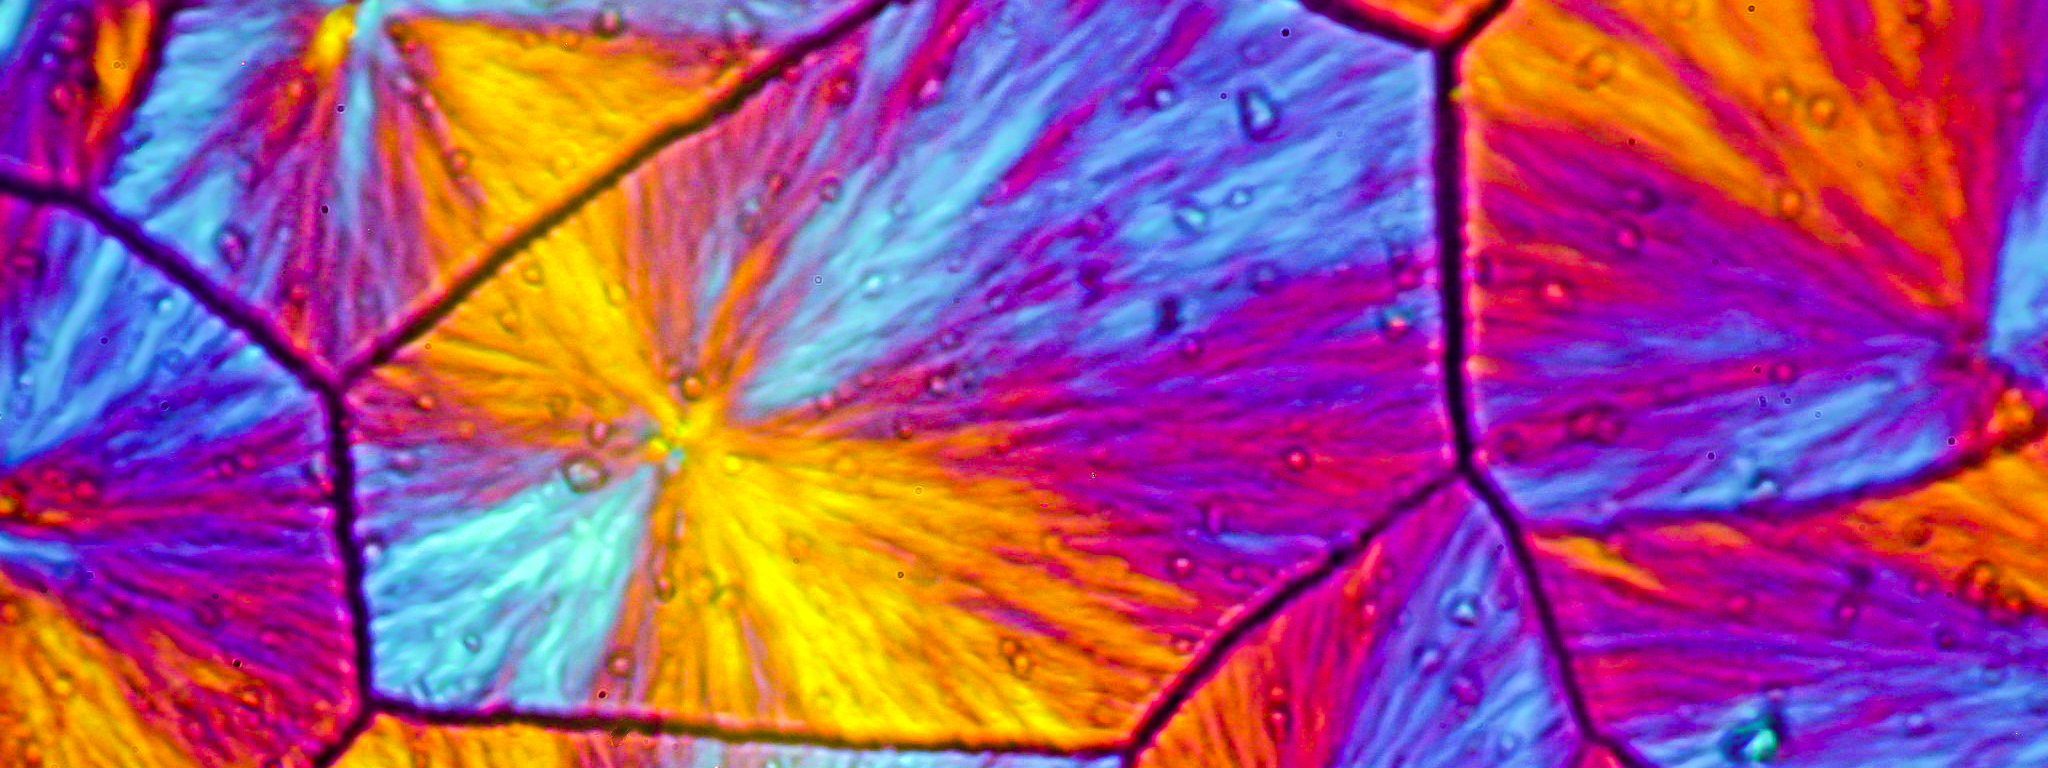 Polyethylene crystellites viewed using polarised light microscopy